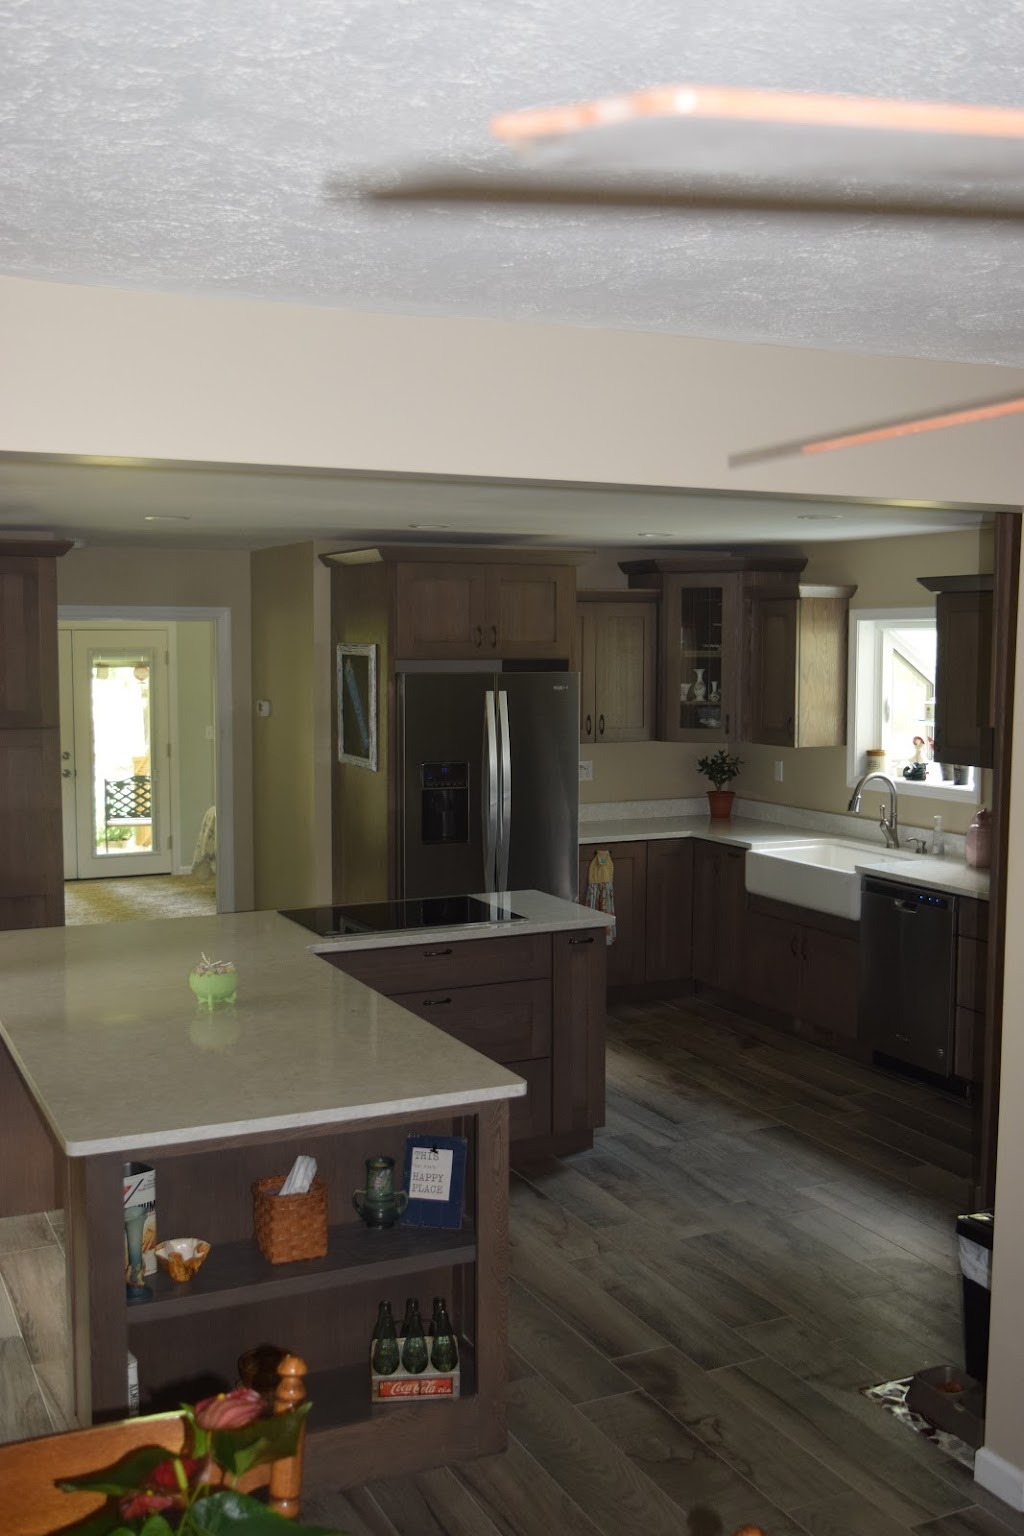 JDB Home Improvements | 46 Jefferson St, Norwalk, OH 44857 | Phone: (419) 660-8052